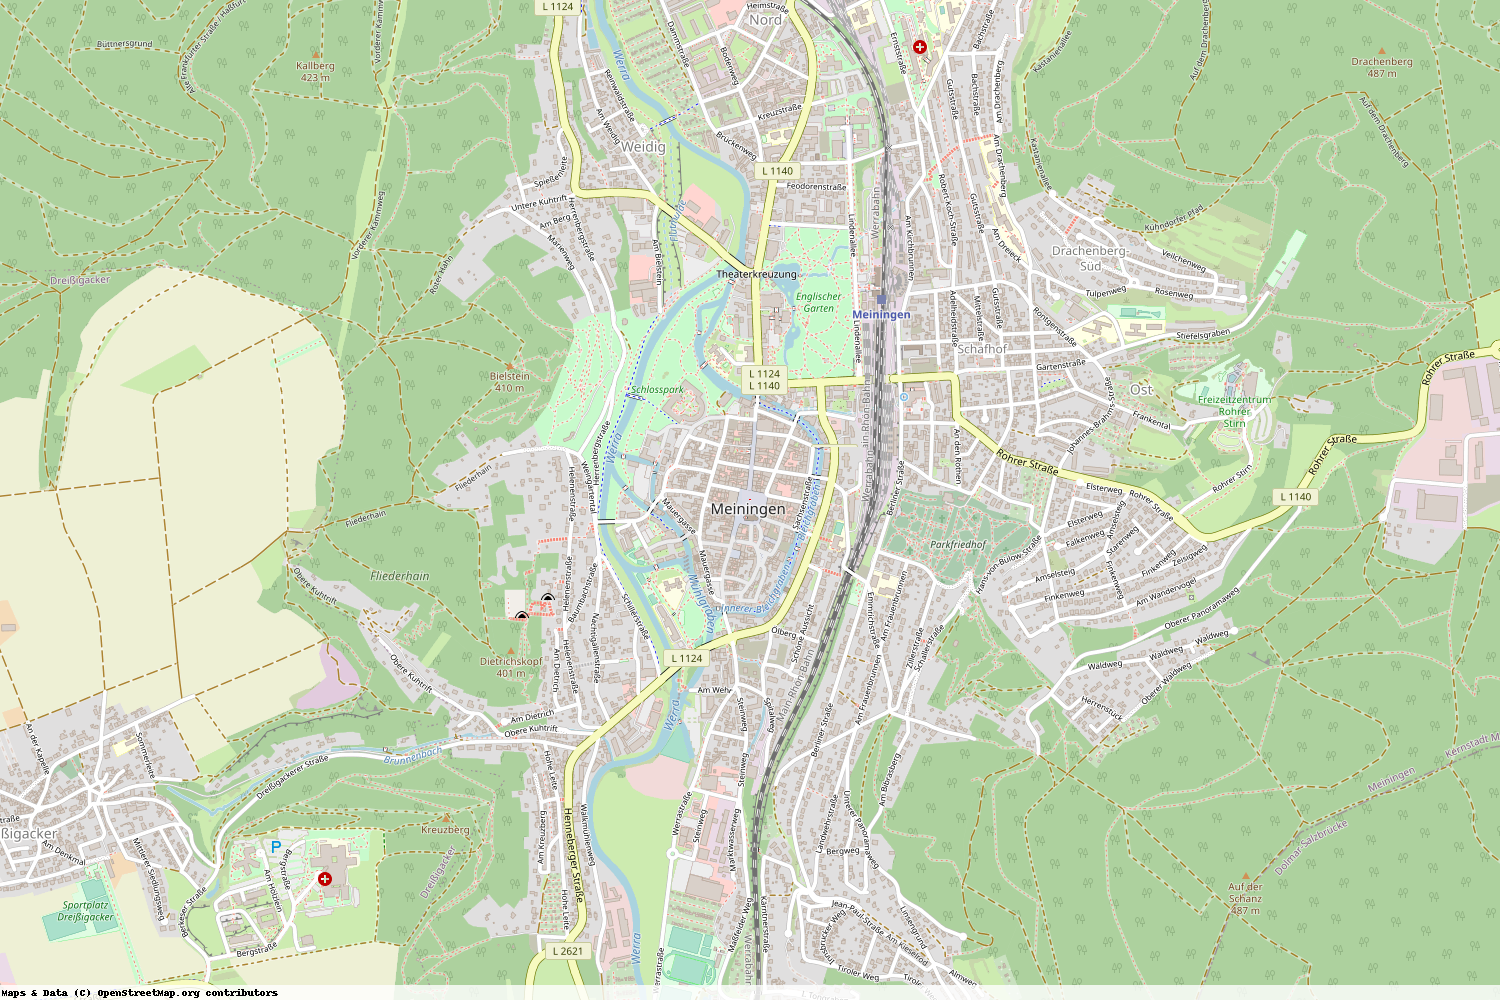 Ist gerade Stromausfall in Thüringen - Schmalkalden-Meiningen - Meiningen?